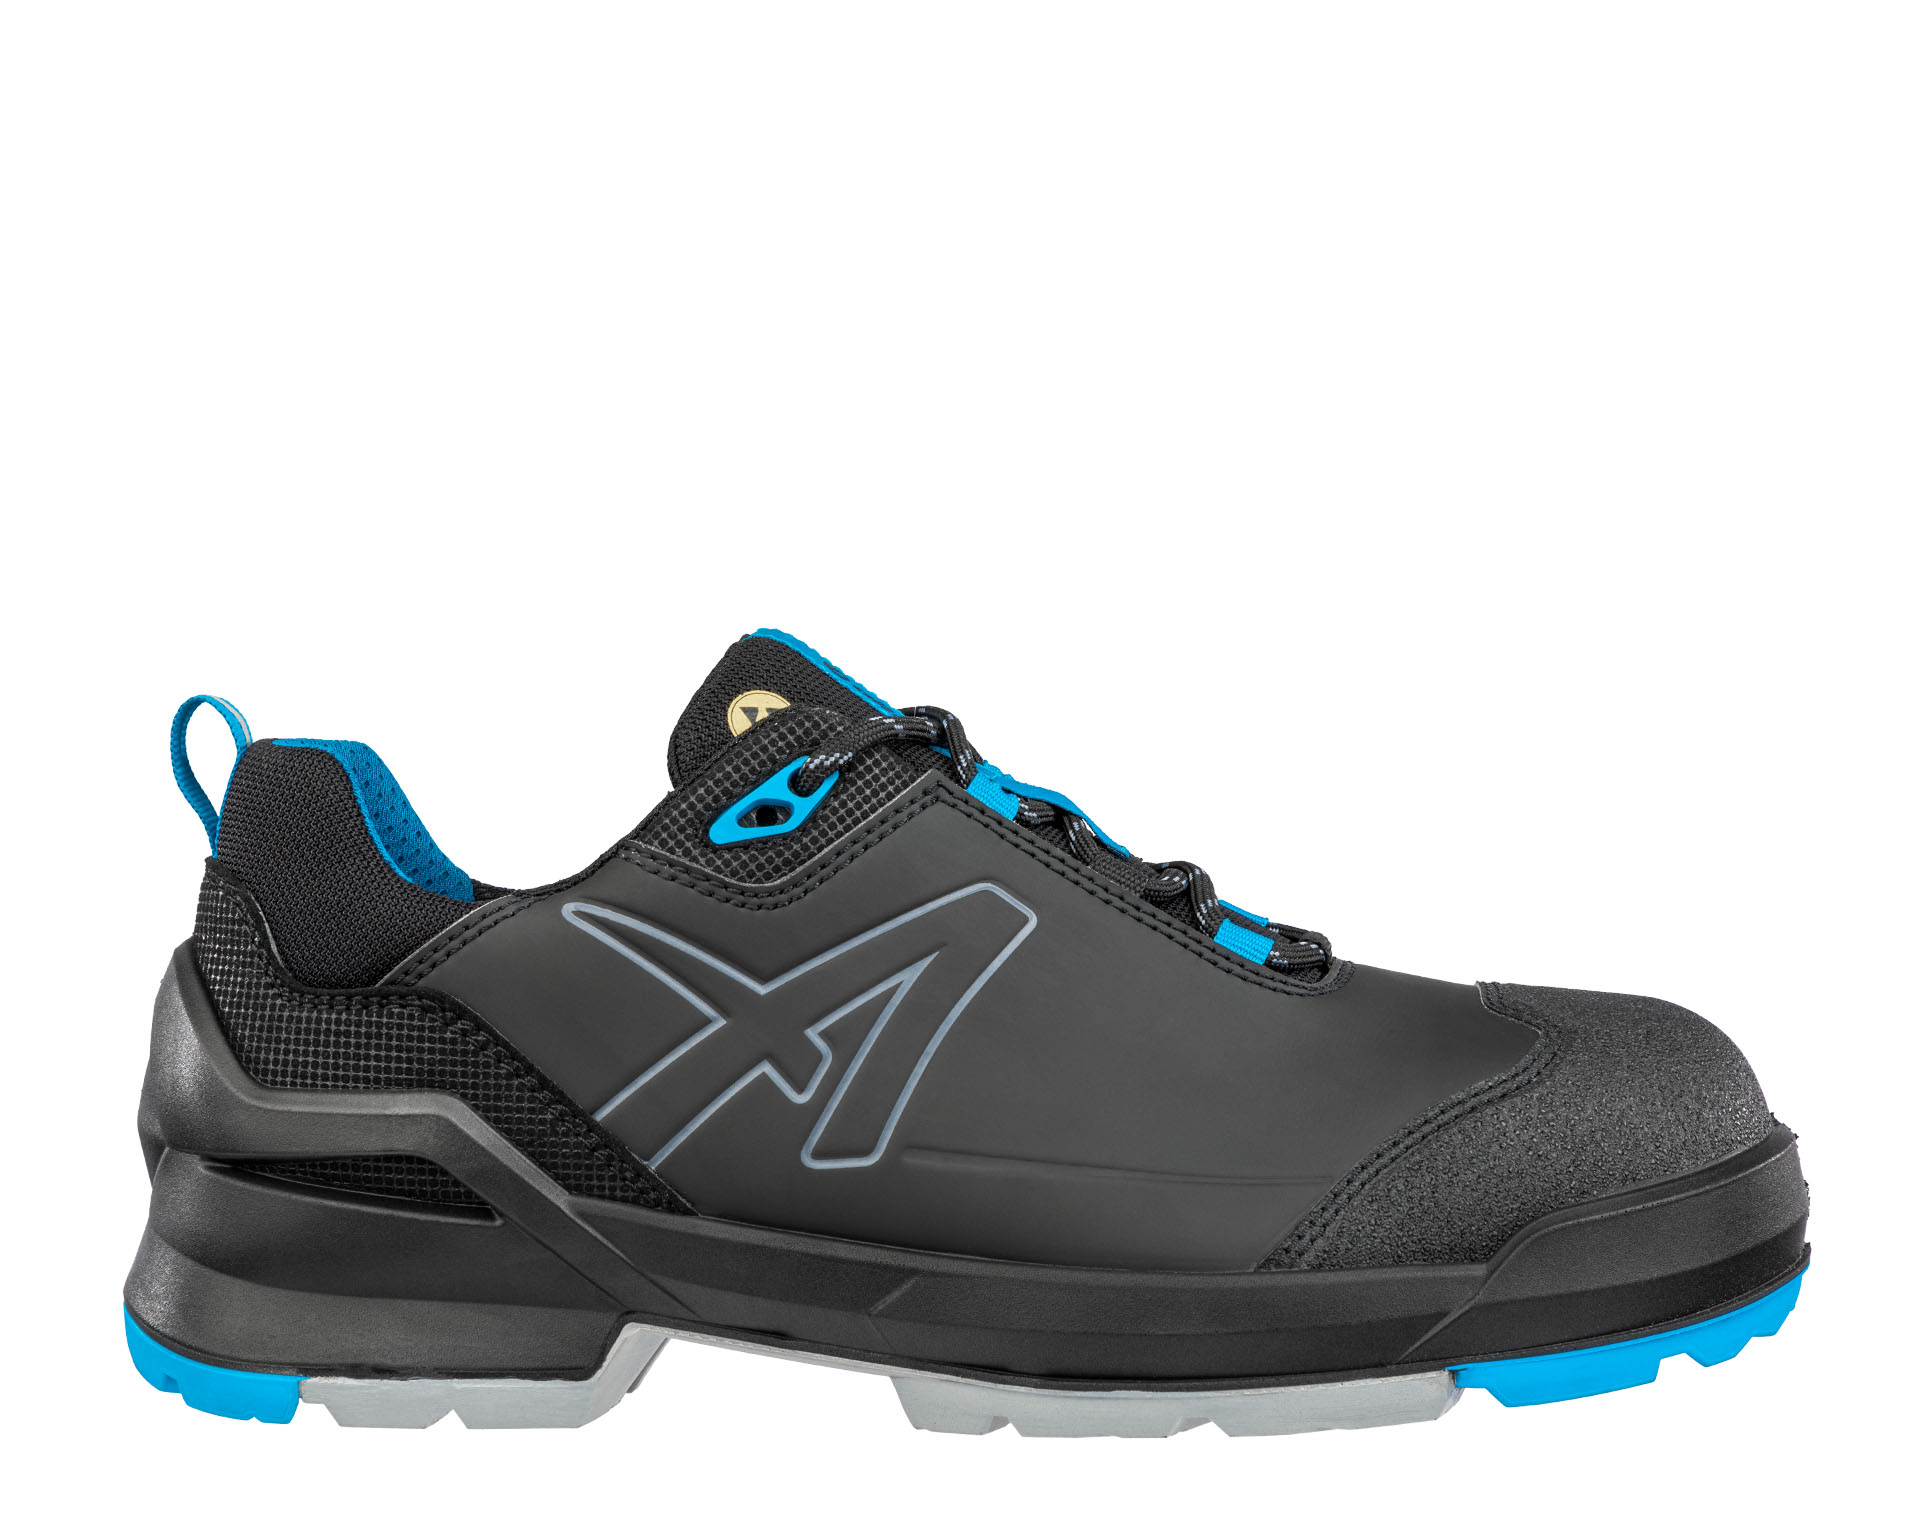 TARAVAL BLACK/BLUE LOW|ALBATROS shoes S3L safety | Albatros ESD